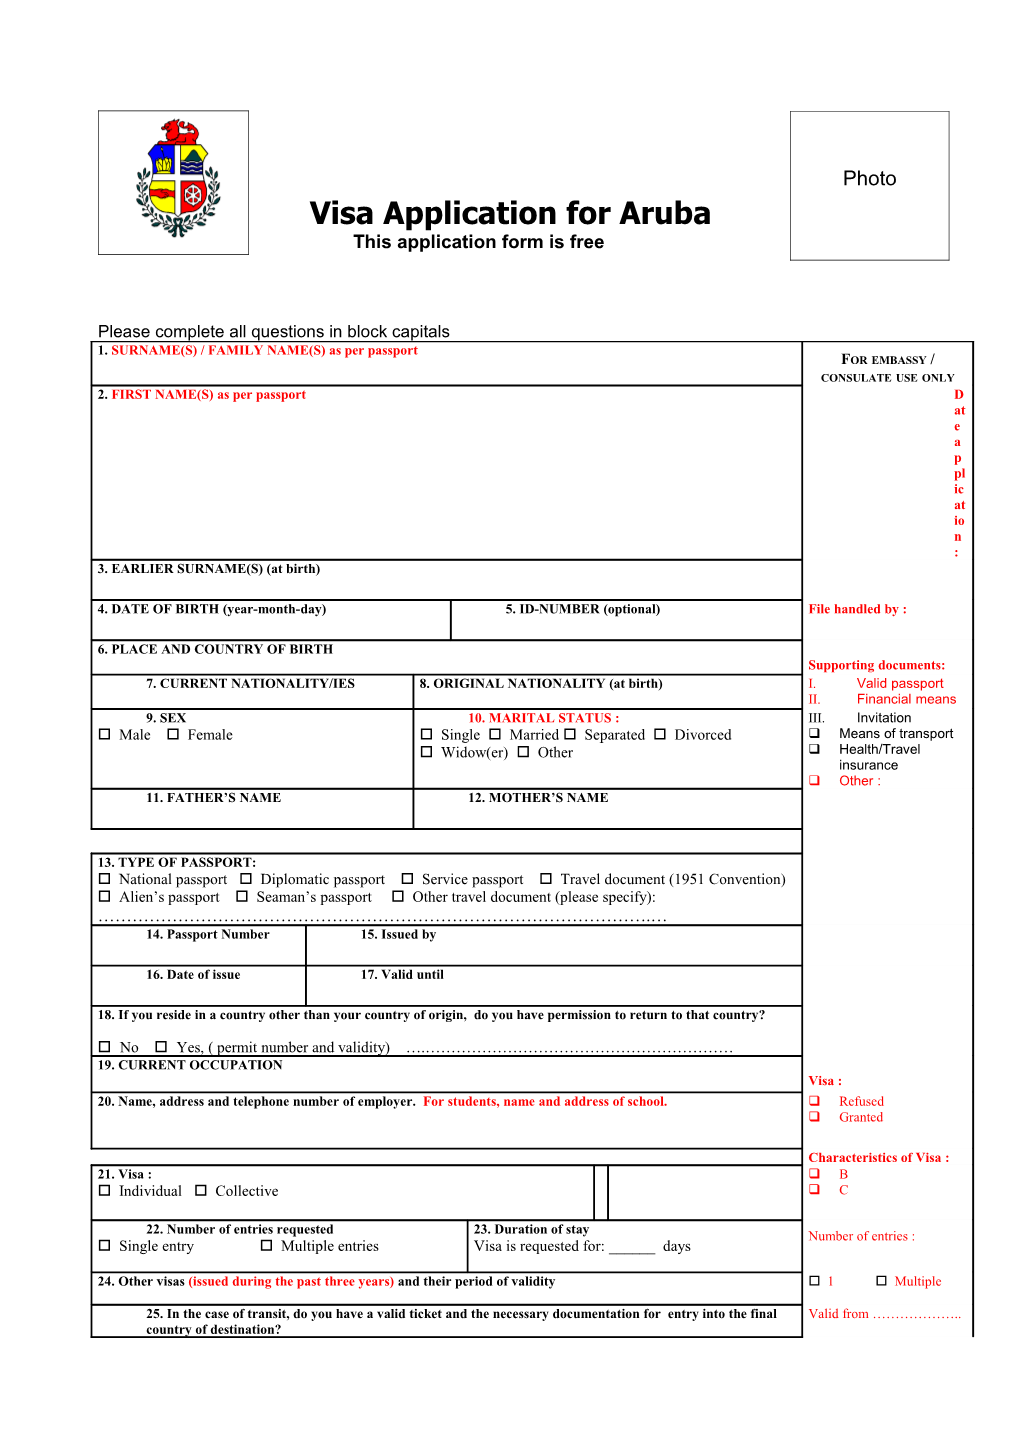 Visa Application for Aruba